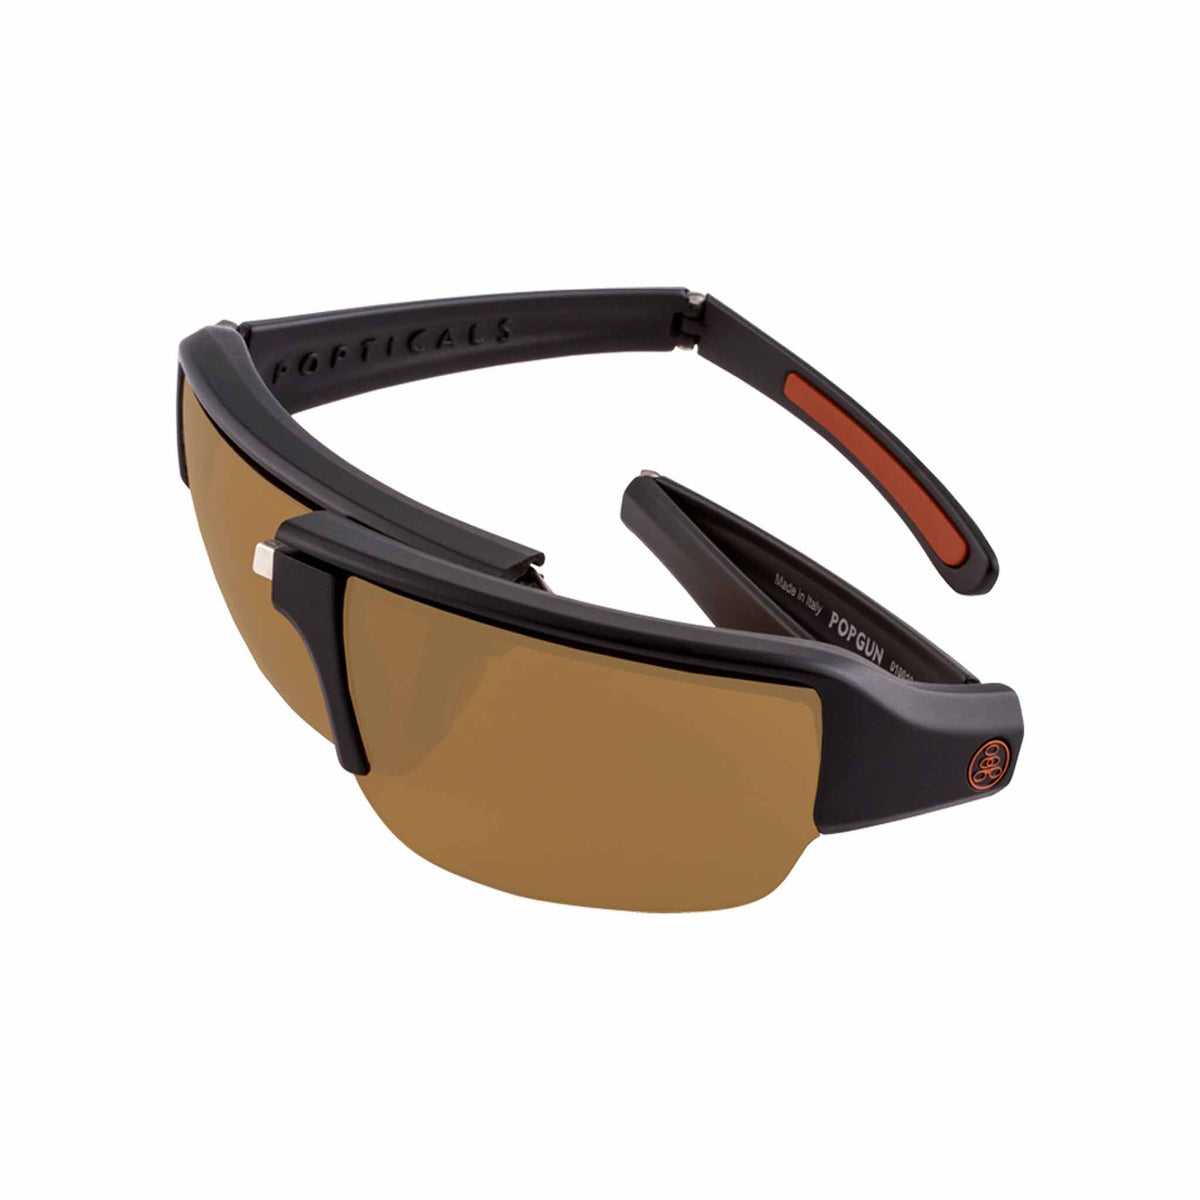 Popticals, Premium Compact Sunglasses, PopGun, 010010-NMNP, Polarized Sunglasses, Matte Black Frame, Brown Lenses, Spider View